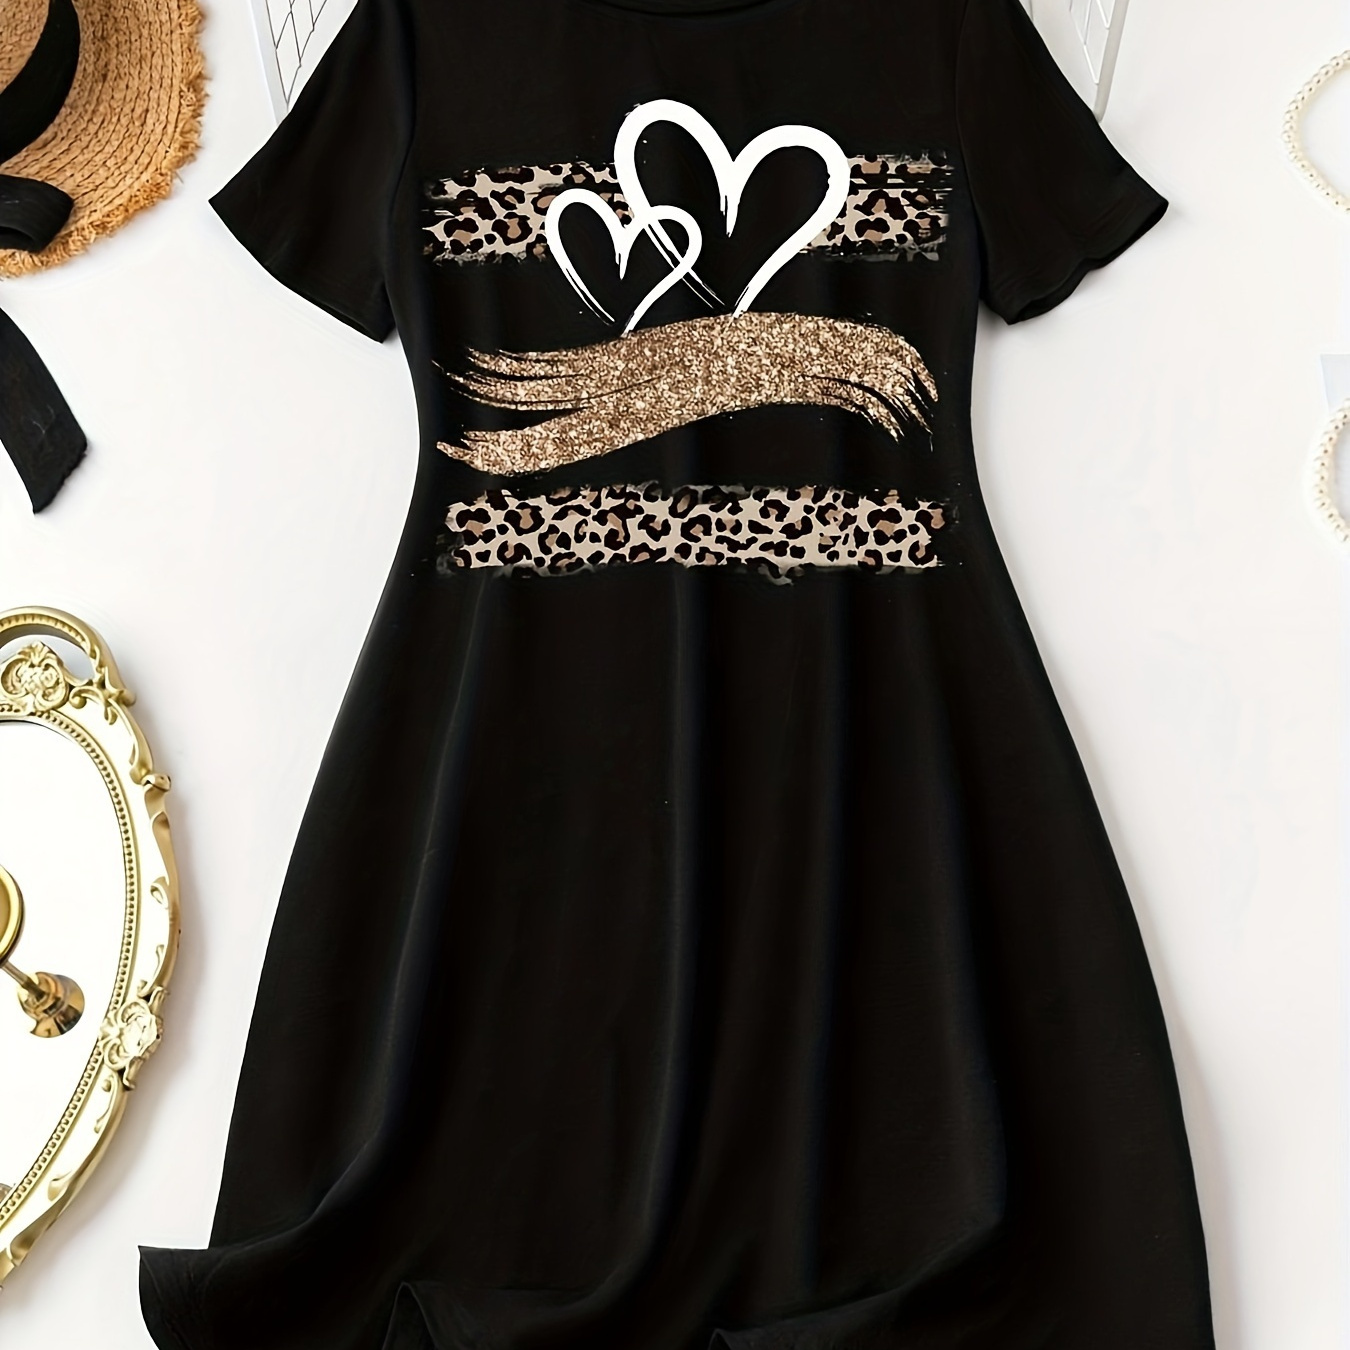 

Leopard & Heart Print Crew Neck Dress, Casual Short Sleeve A-line Dress For Spring & Summer, Women's Clothing